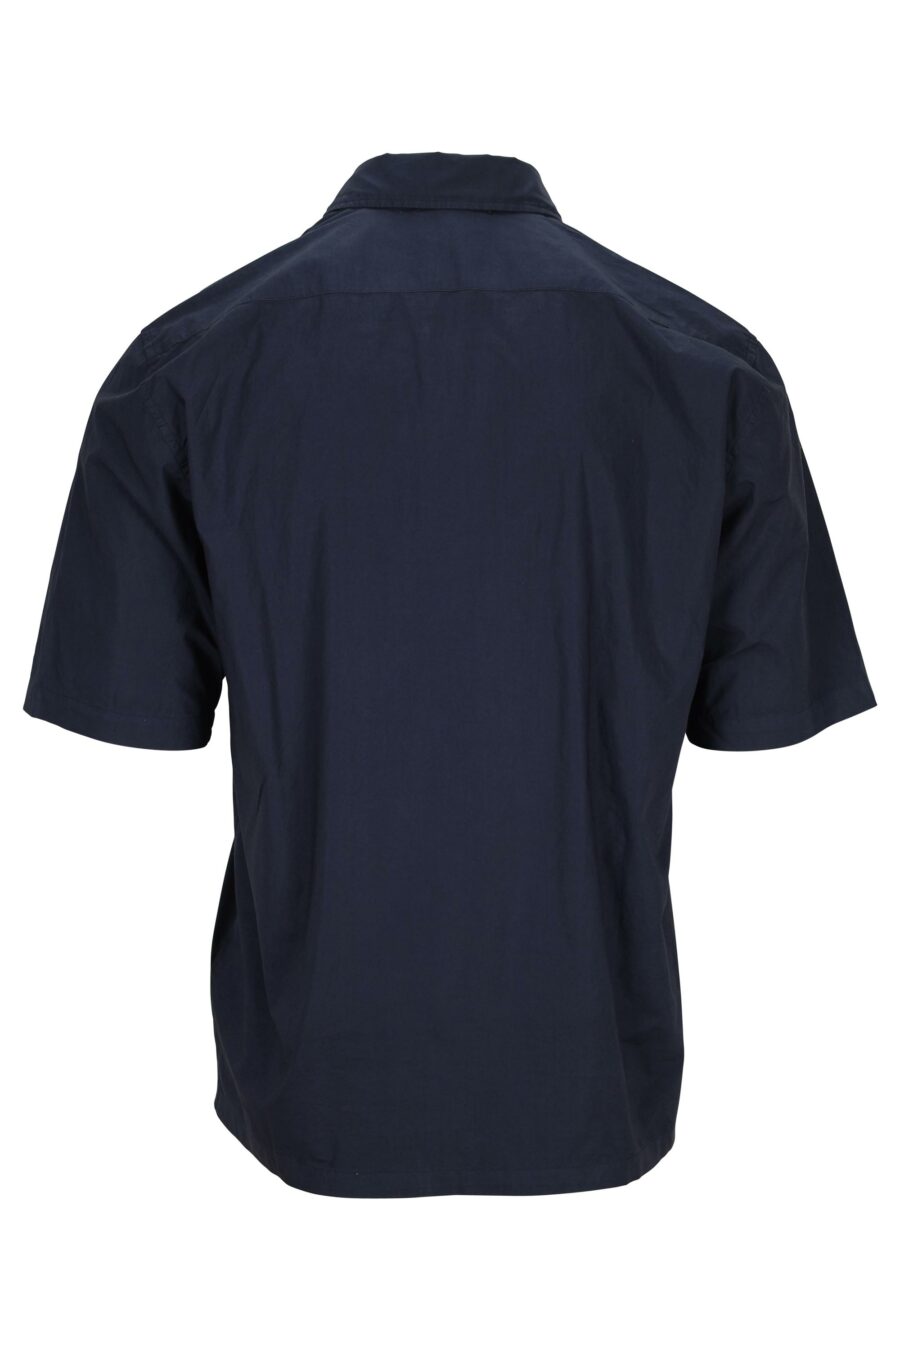 Dark blue short sleeve shirt with pocket and mini-logo - 7620943811551 1